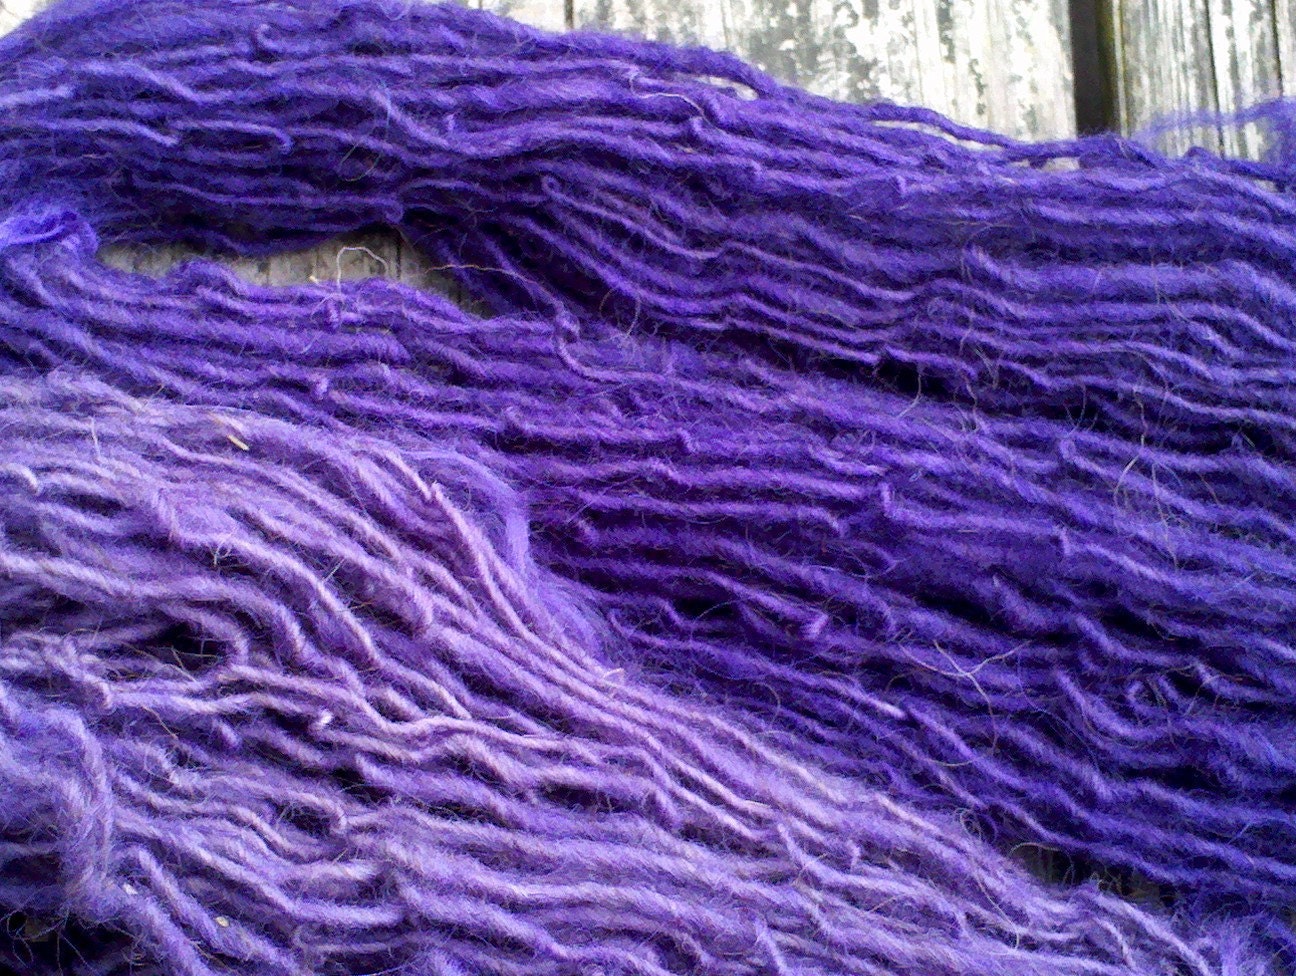 SWINGIN SINGLES Skein (tm) handspun Navajo Churro wool Purple 4.5 oz